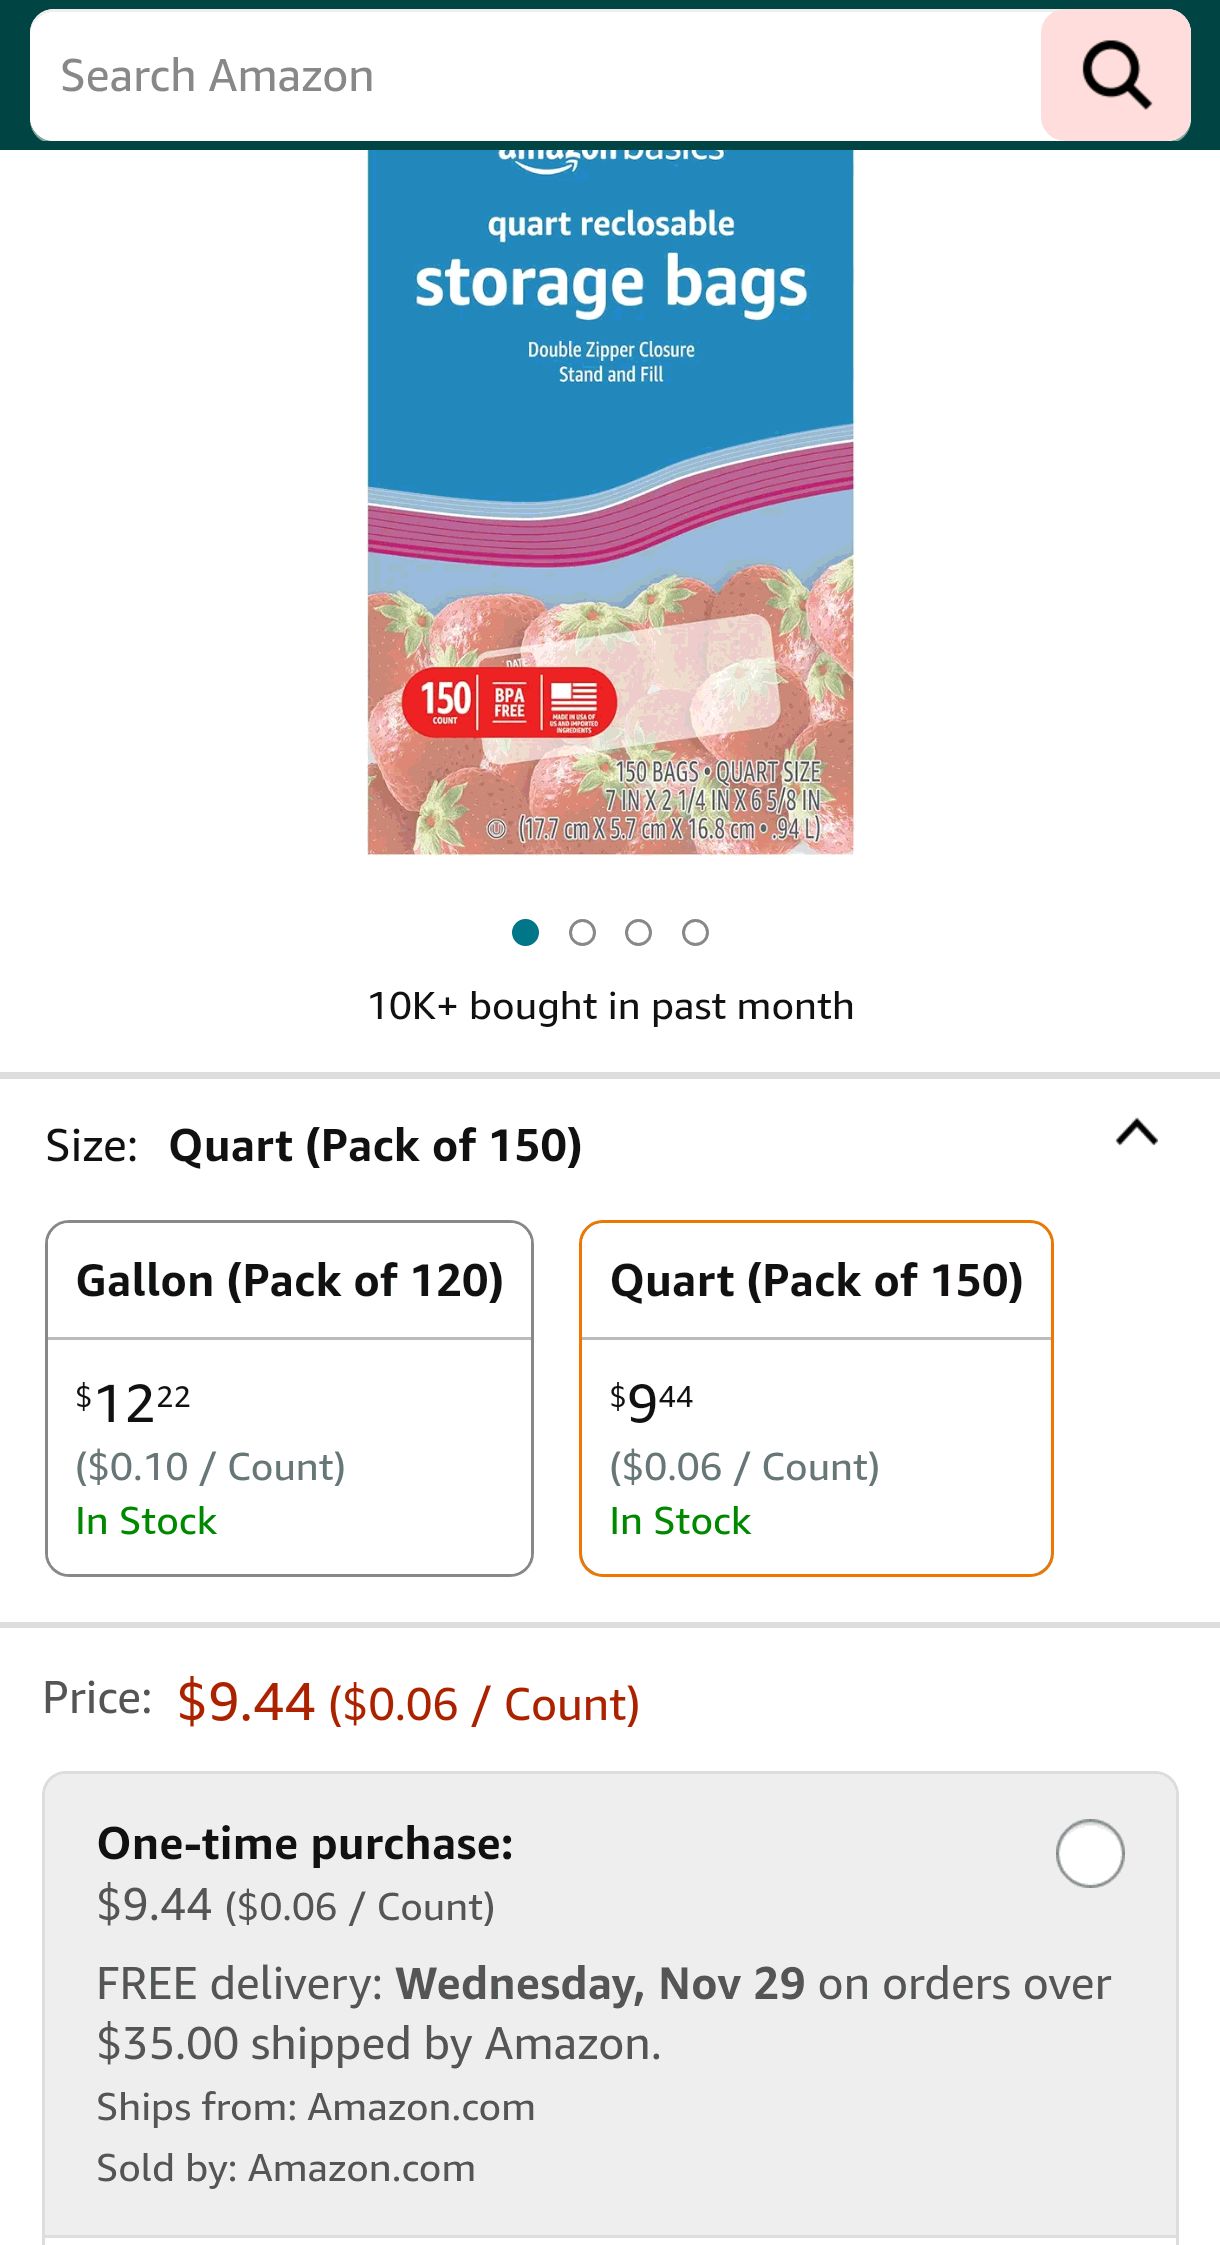 Amazon Basics Gallon Food Storage Bags, 120 Count : Home & Kitchen